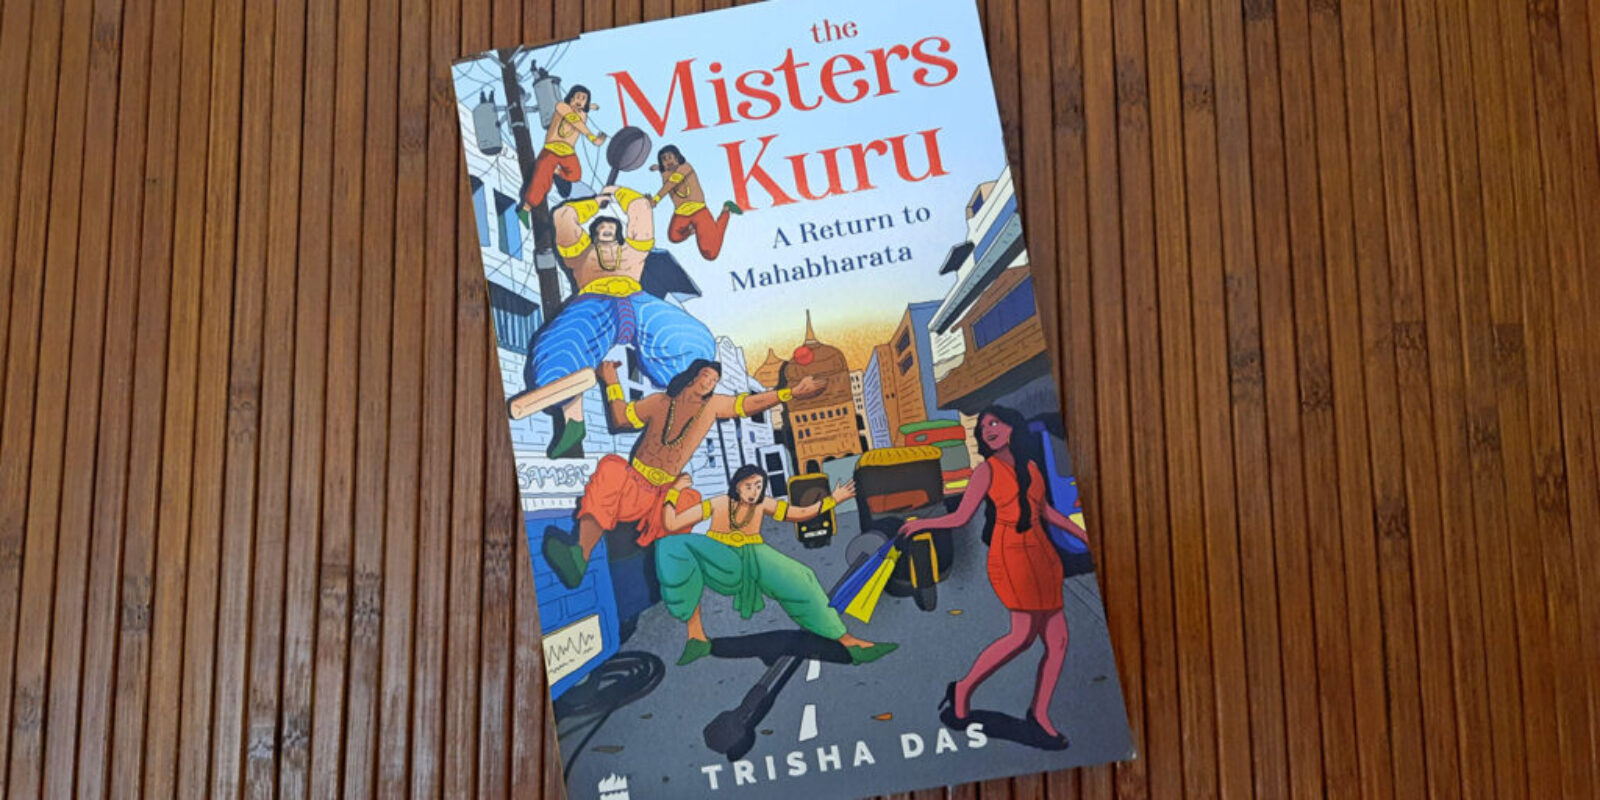 The Misters Kuru: A Return to Mahabharata by Trisha Das Book Review